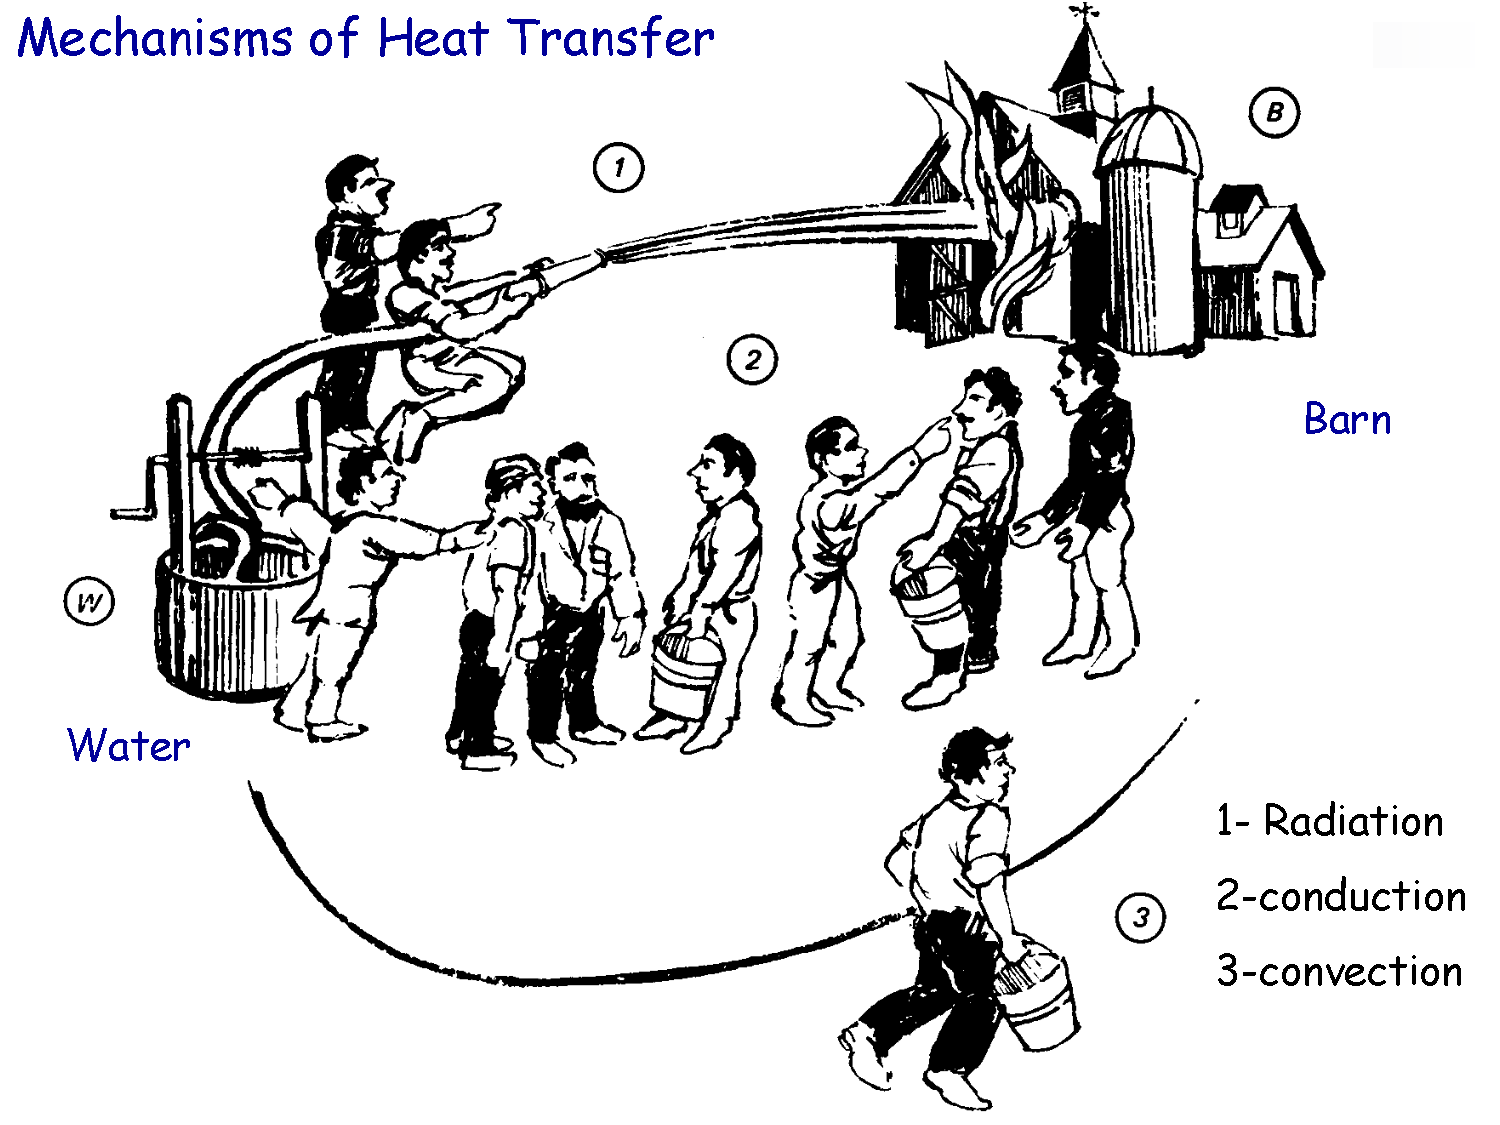 A cartoon describing the mode of heat transfer in a funny way